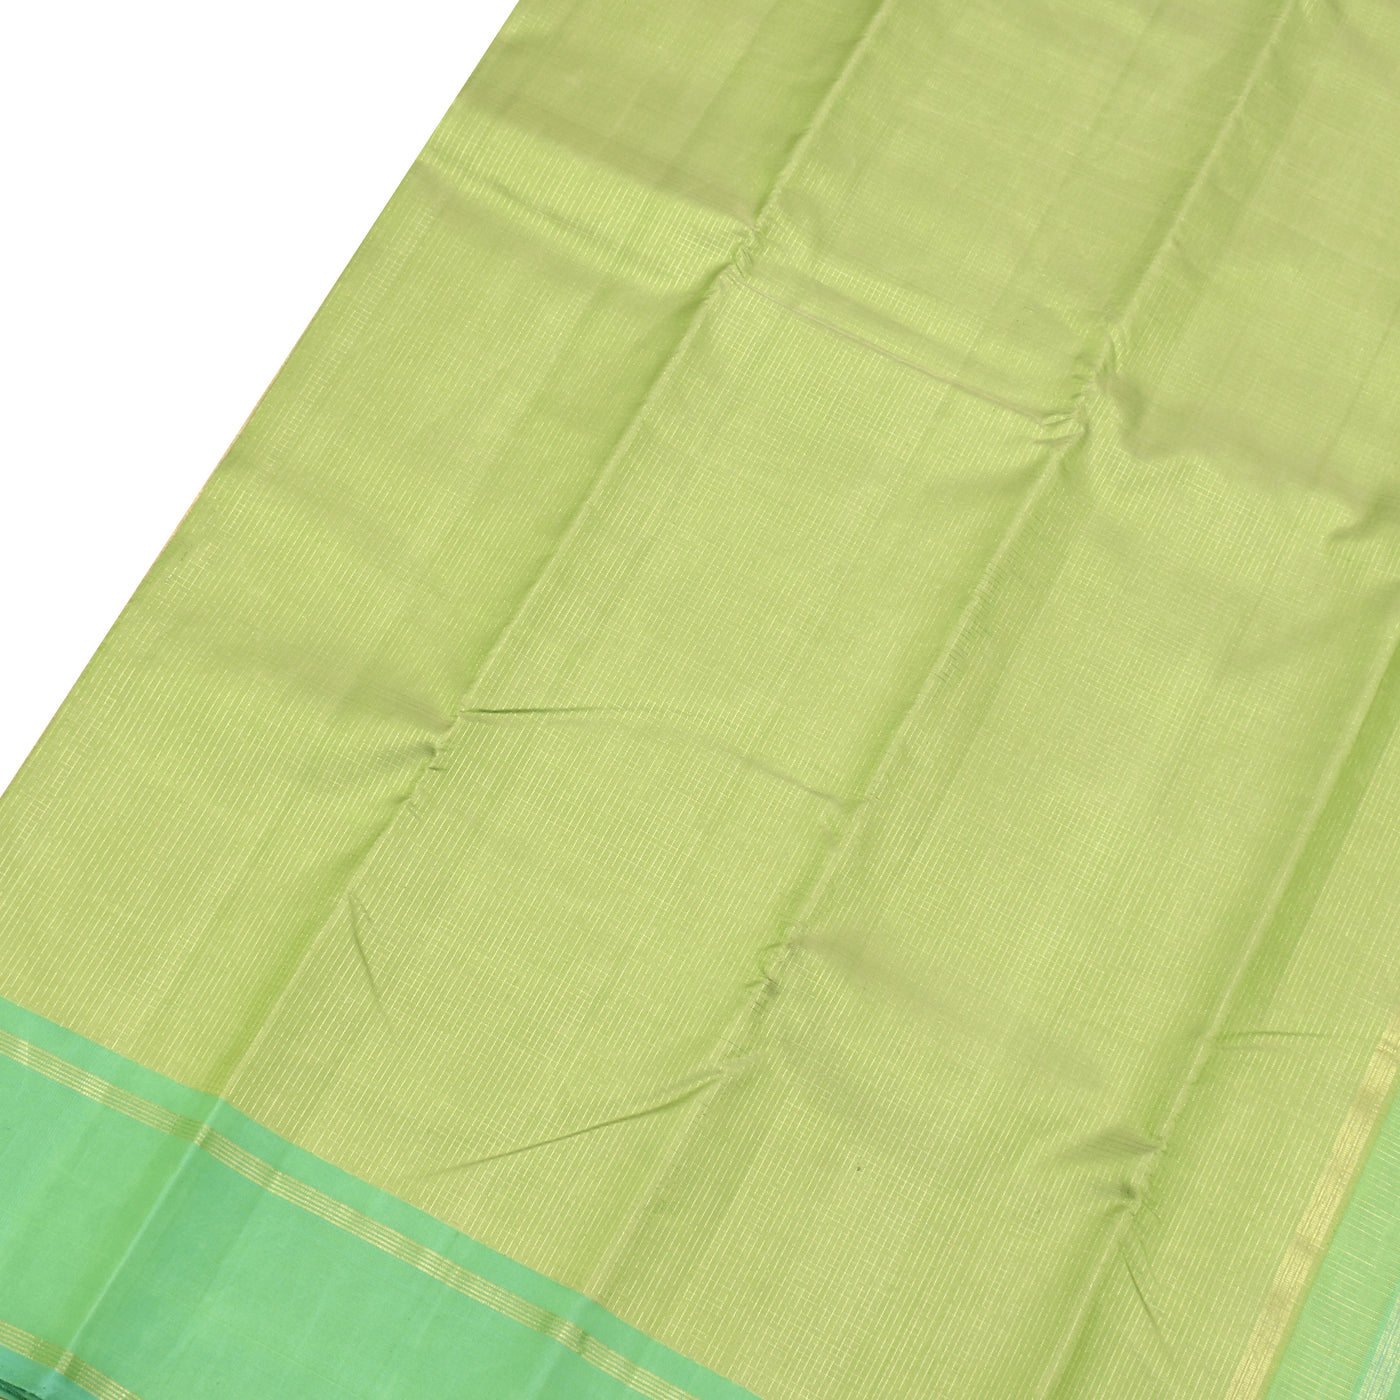 Elaichi Green Kanchipuram Silk Saree with Vairaoosi Checks Design